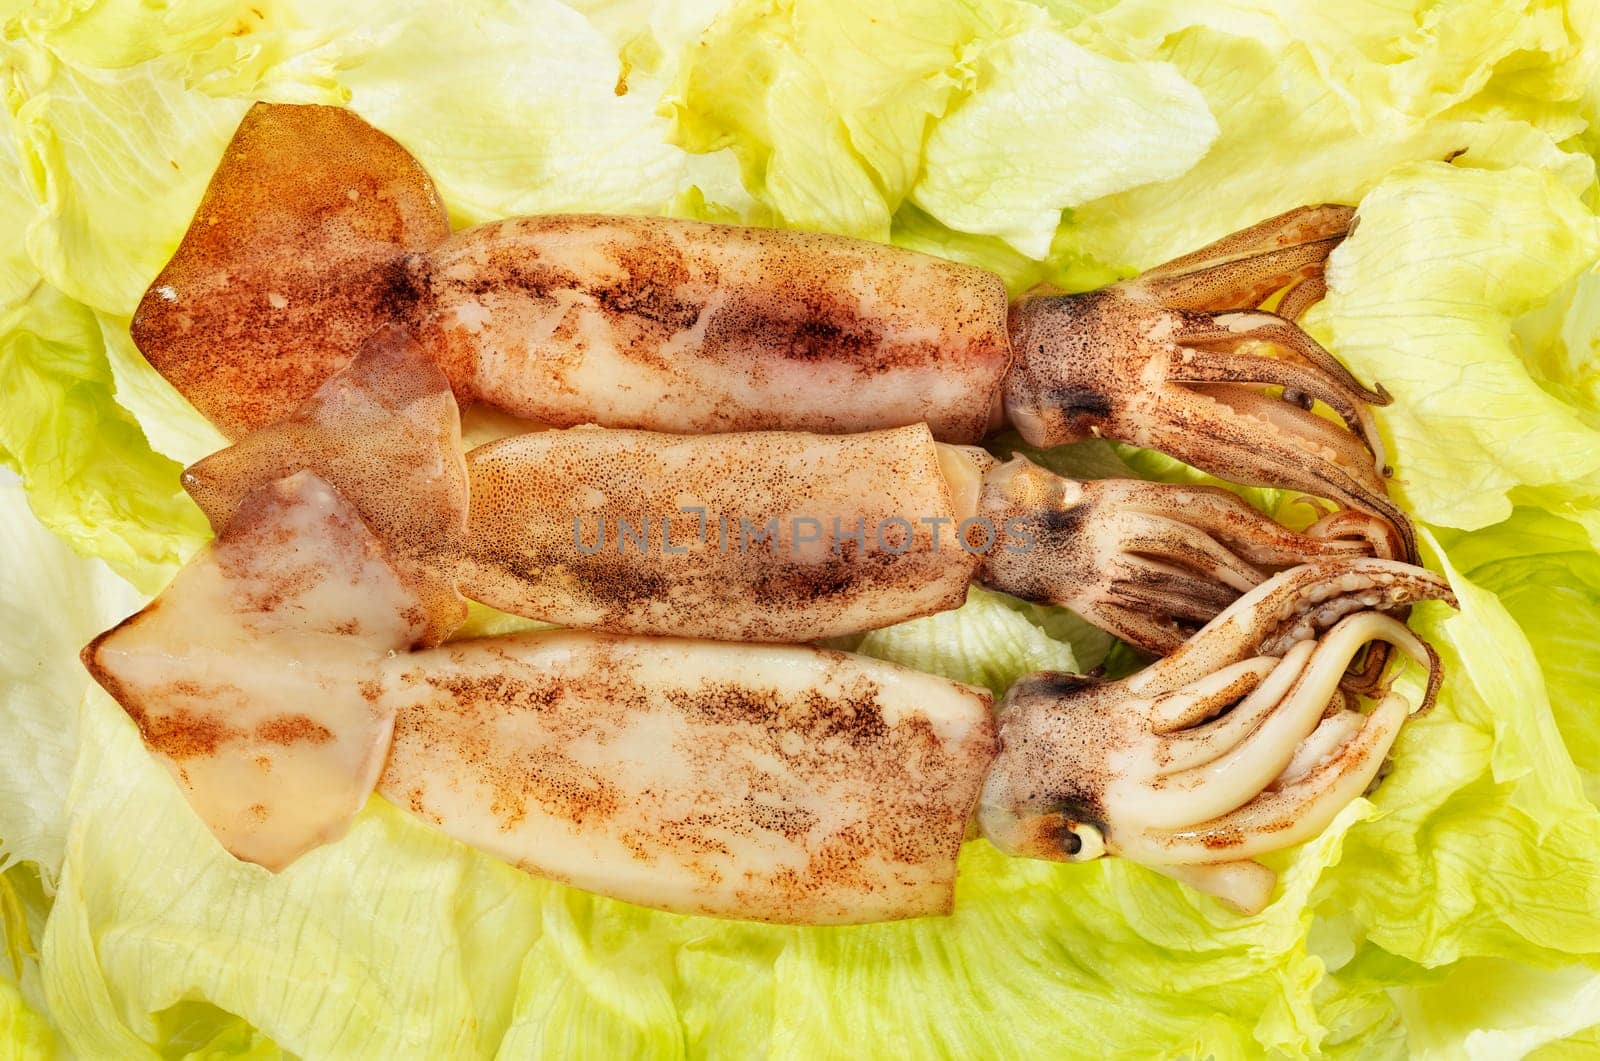  Flying squid fish on salad by victimewalker